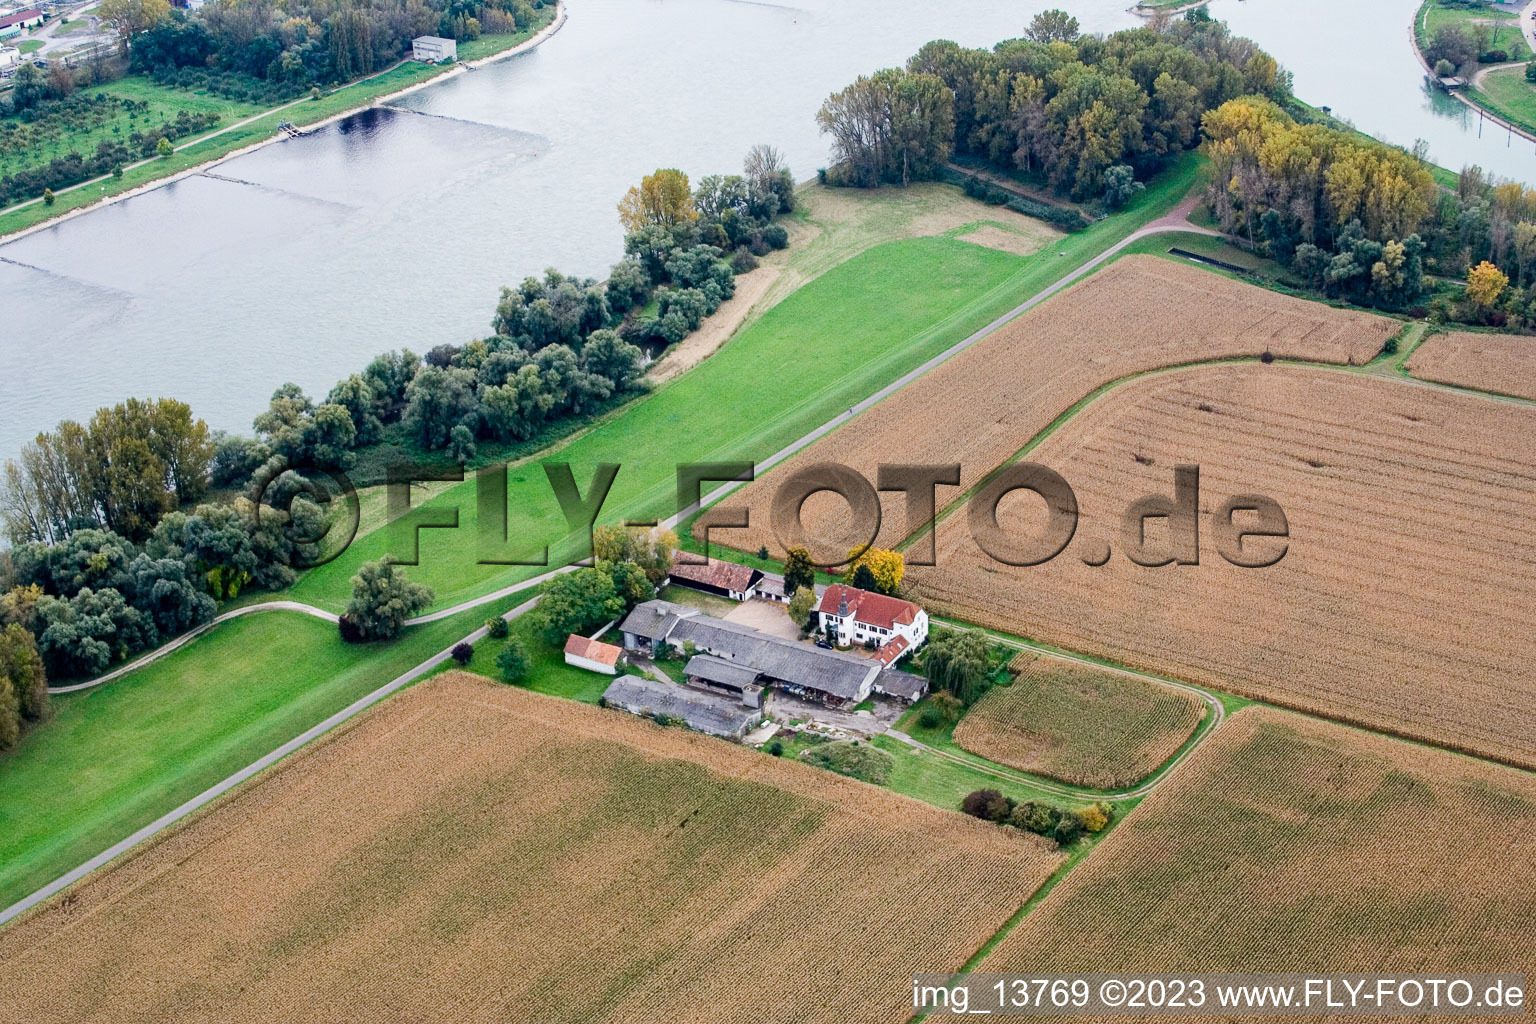 Drone recording of District Maximiliansau in Wörth am Rhein in the state Rhineland-Palatinate, Germany